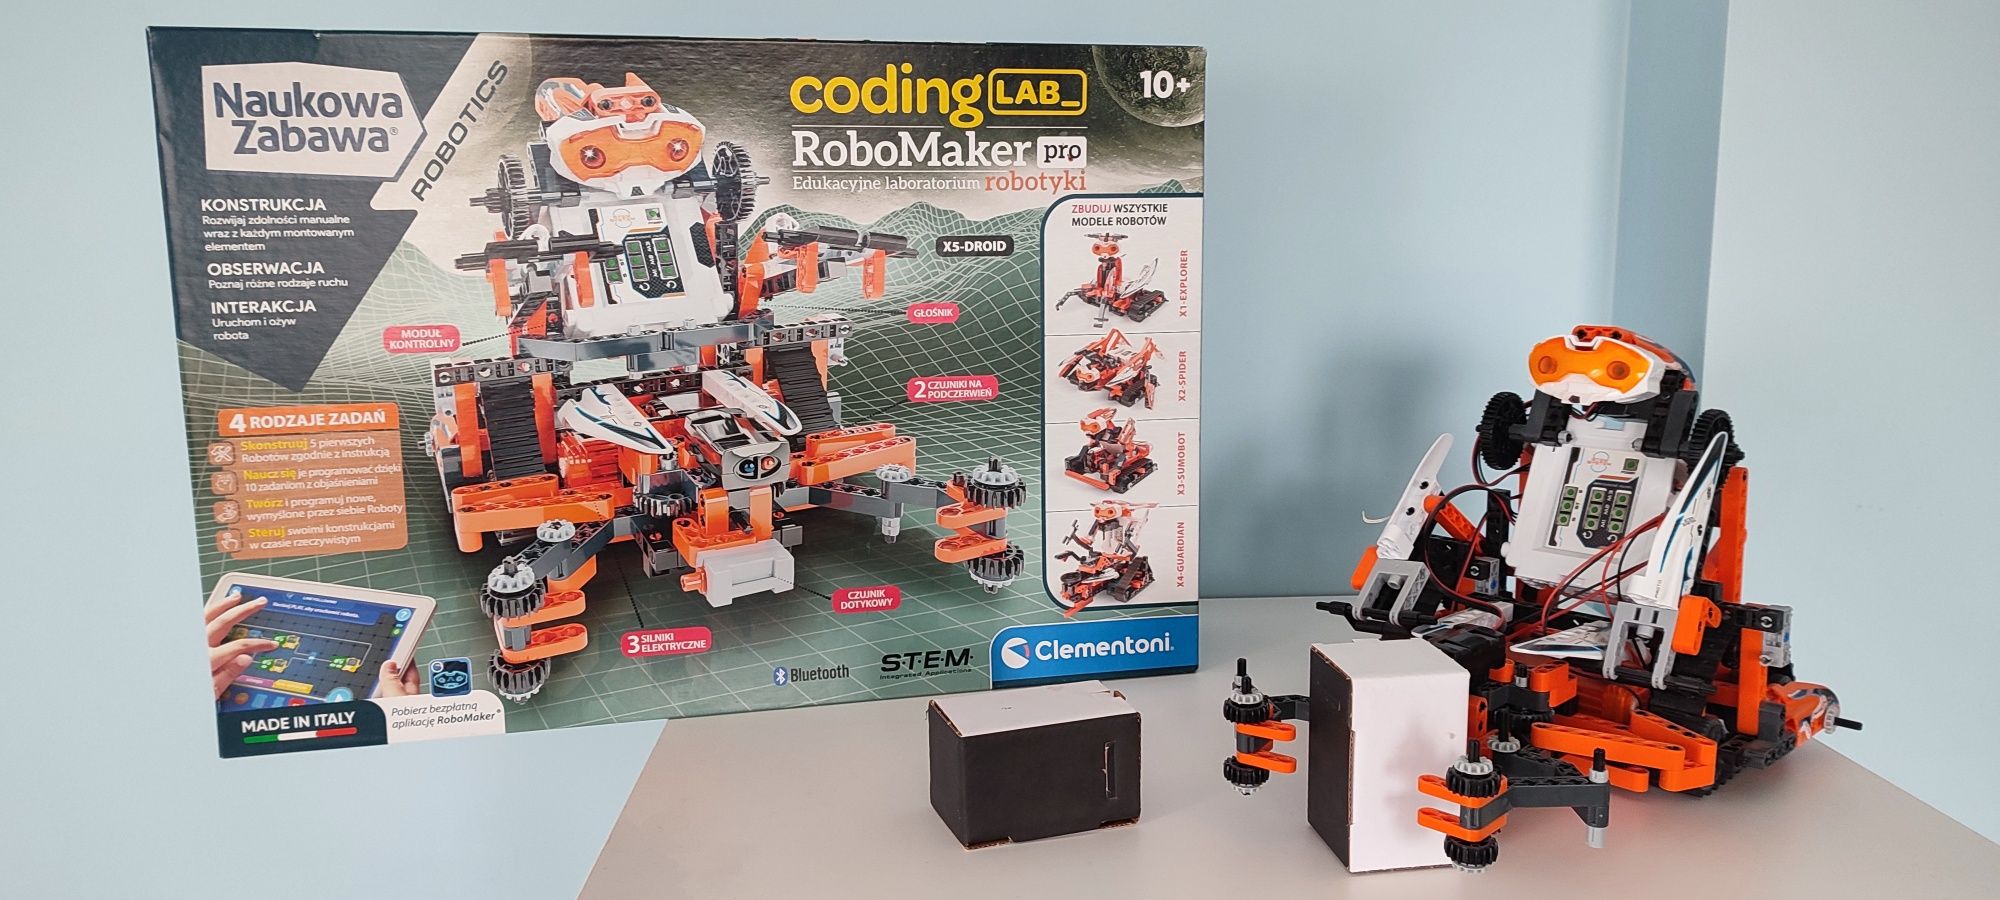 RoboMaker pro Edukacyjne laboratorium robotyki